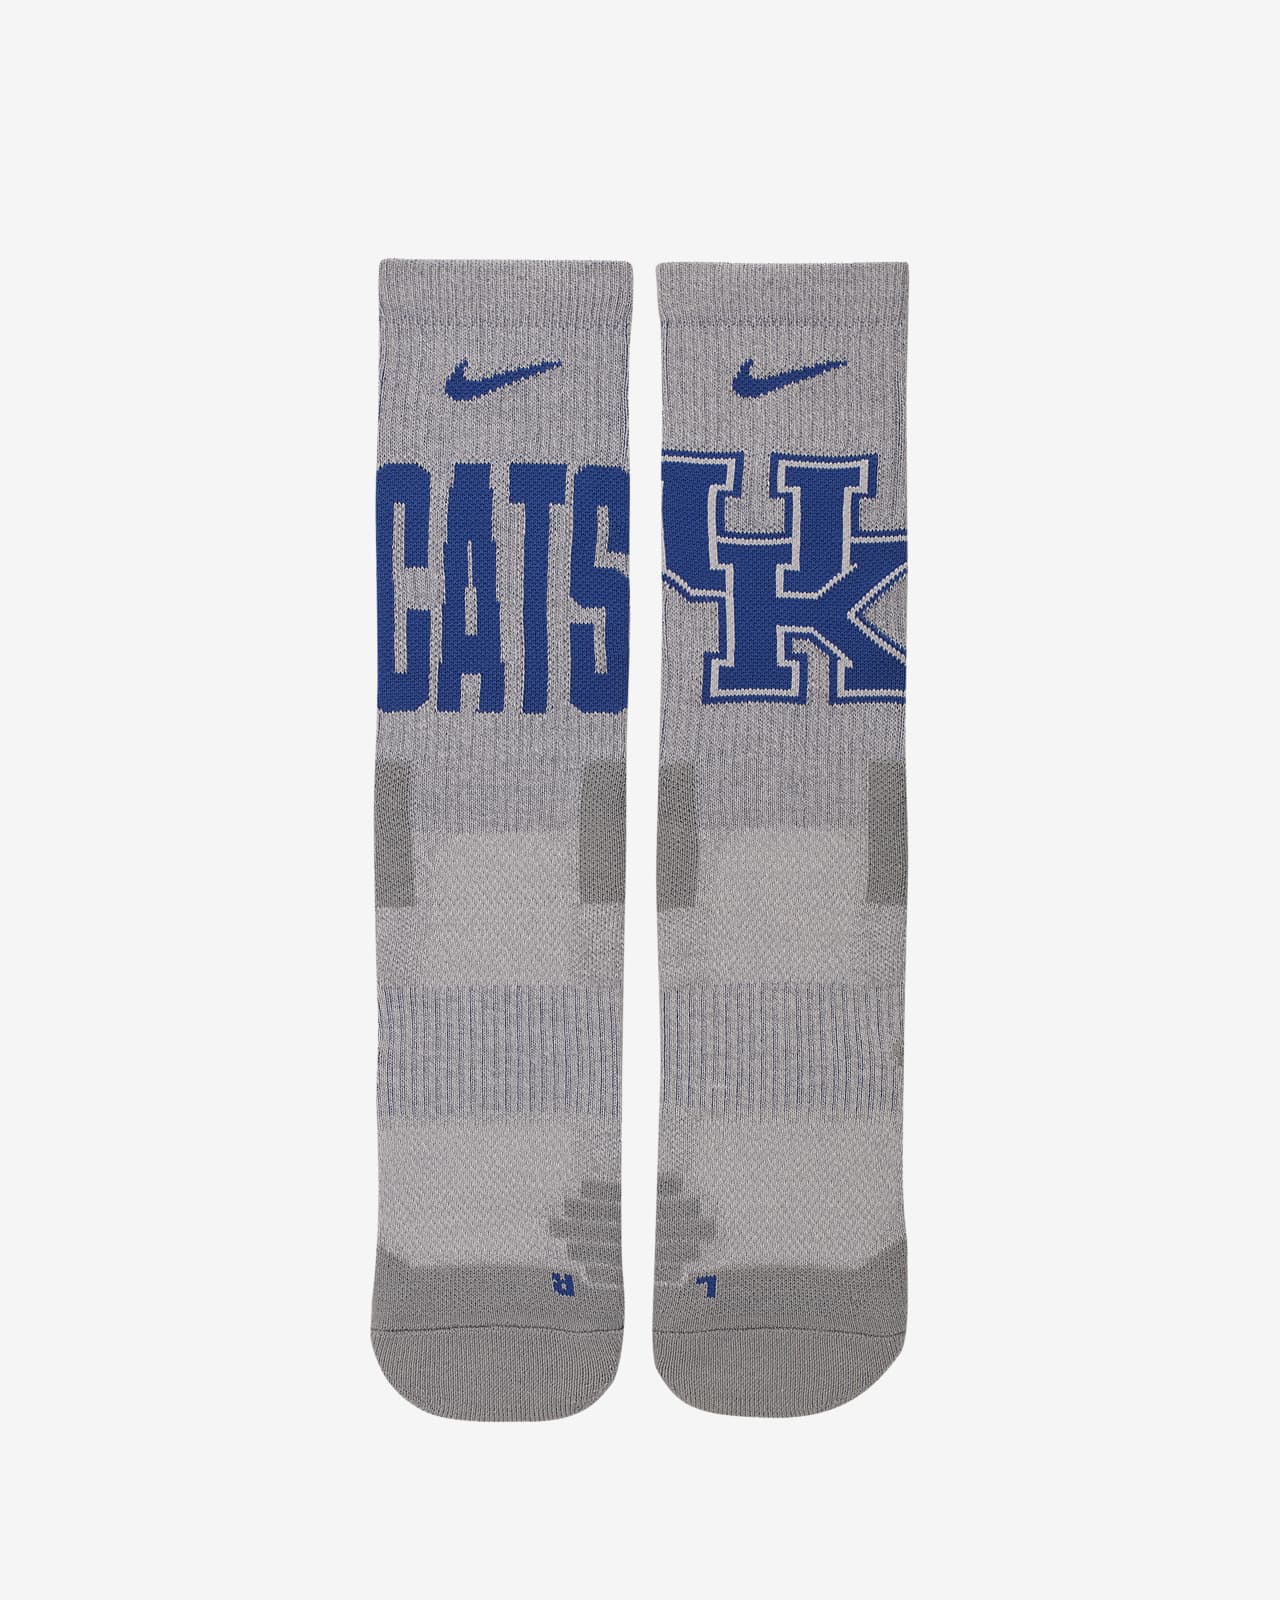 Calcetines deportivos de básquetbol Nike College Elite (Kentucky)